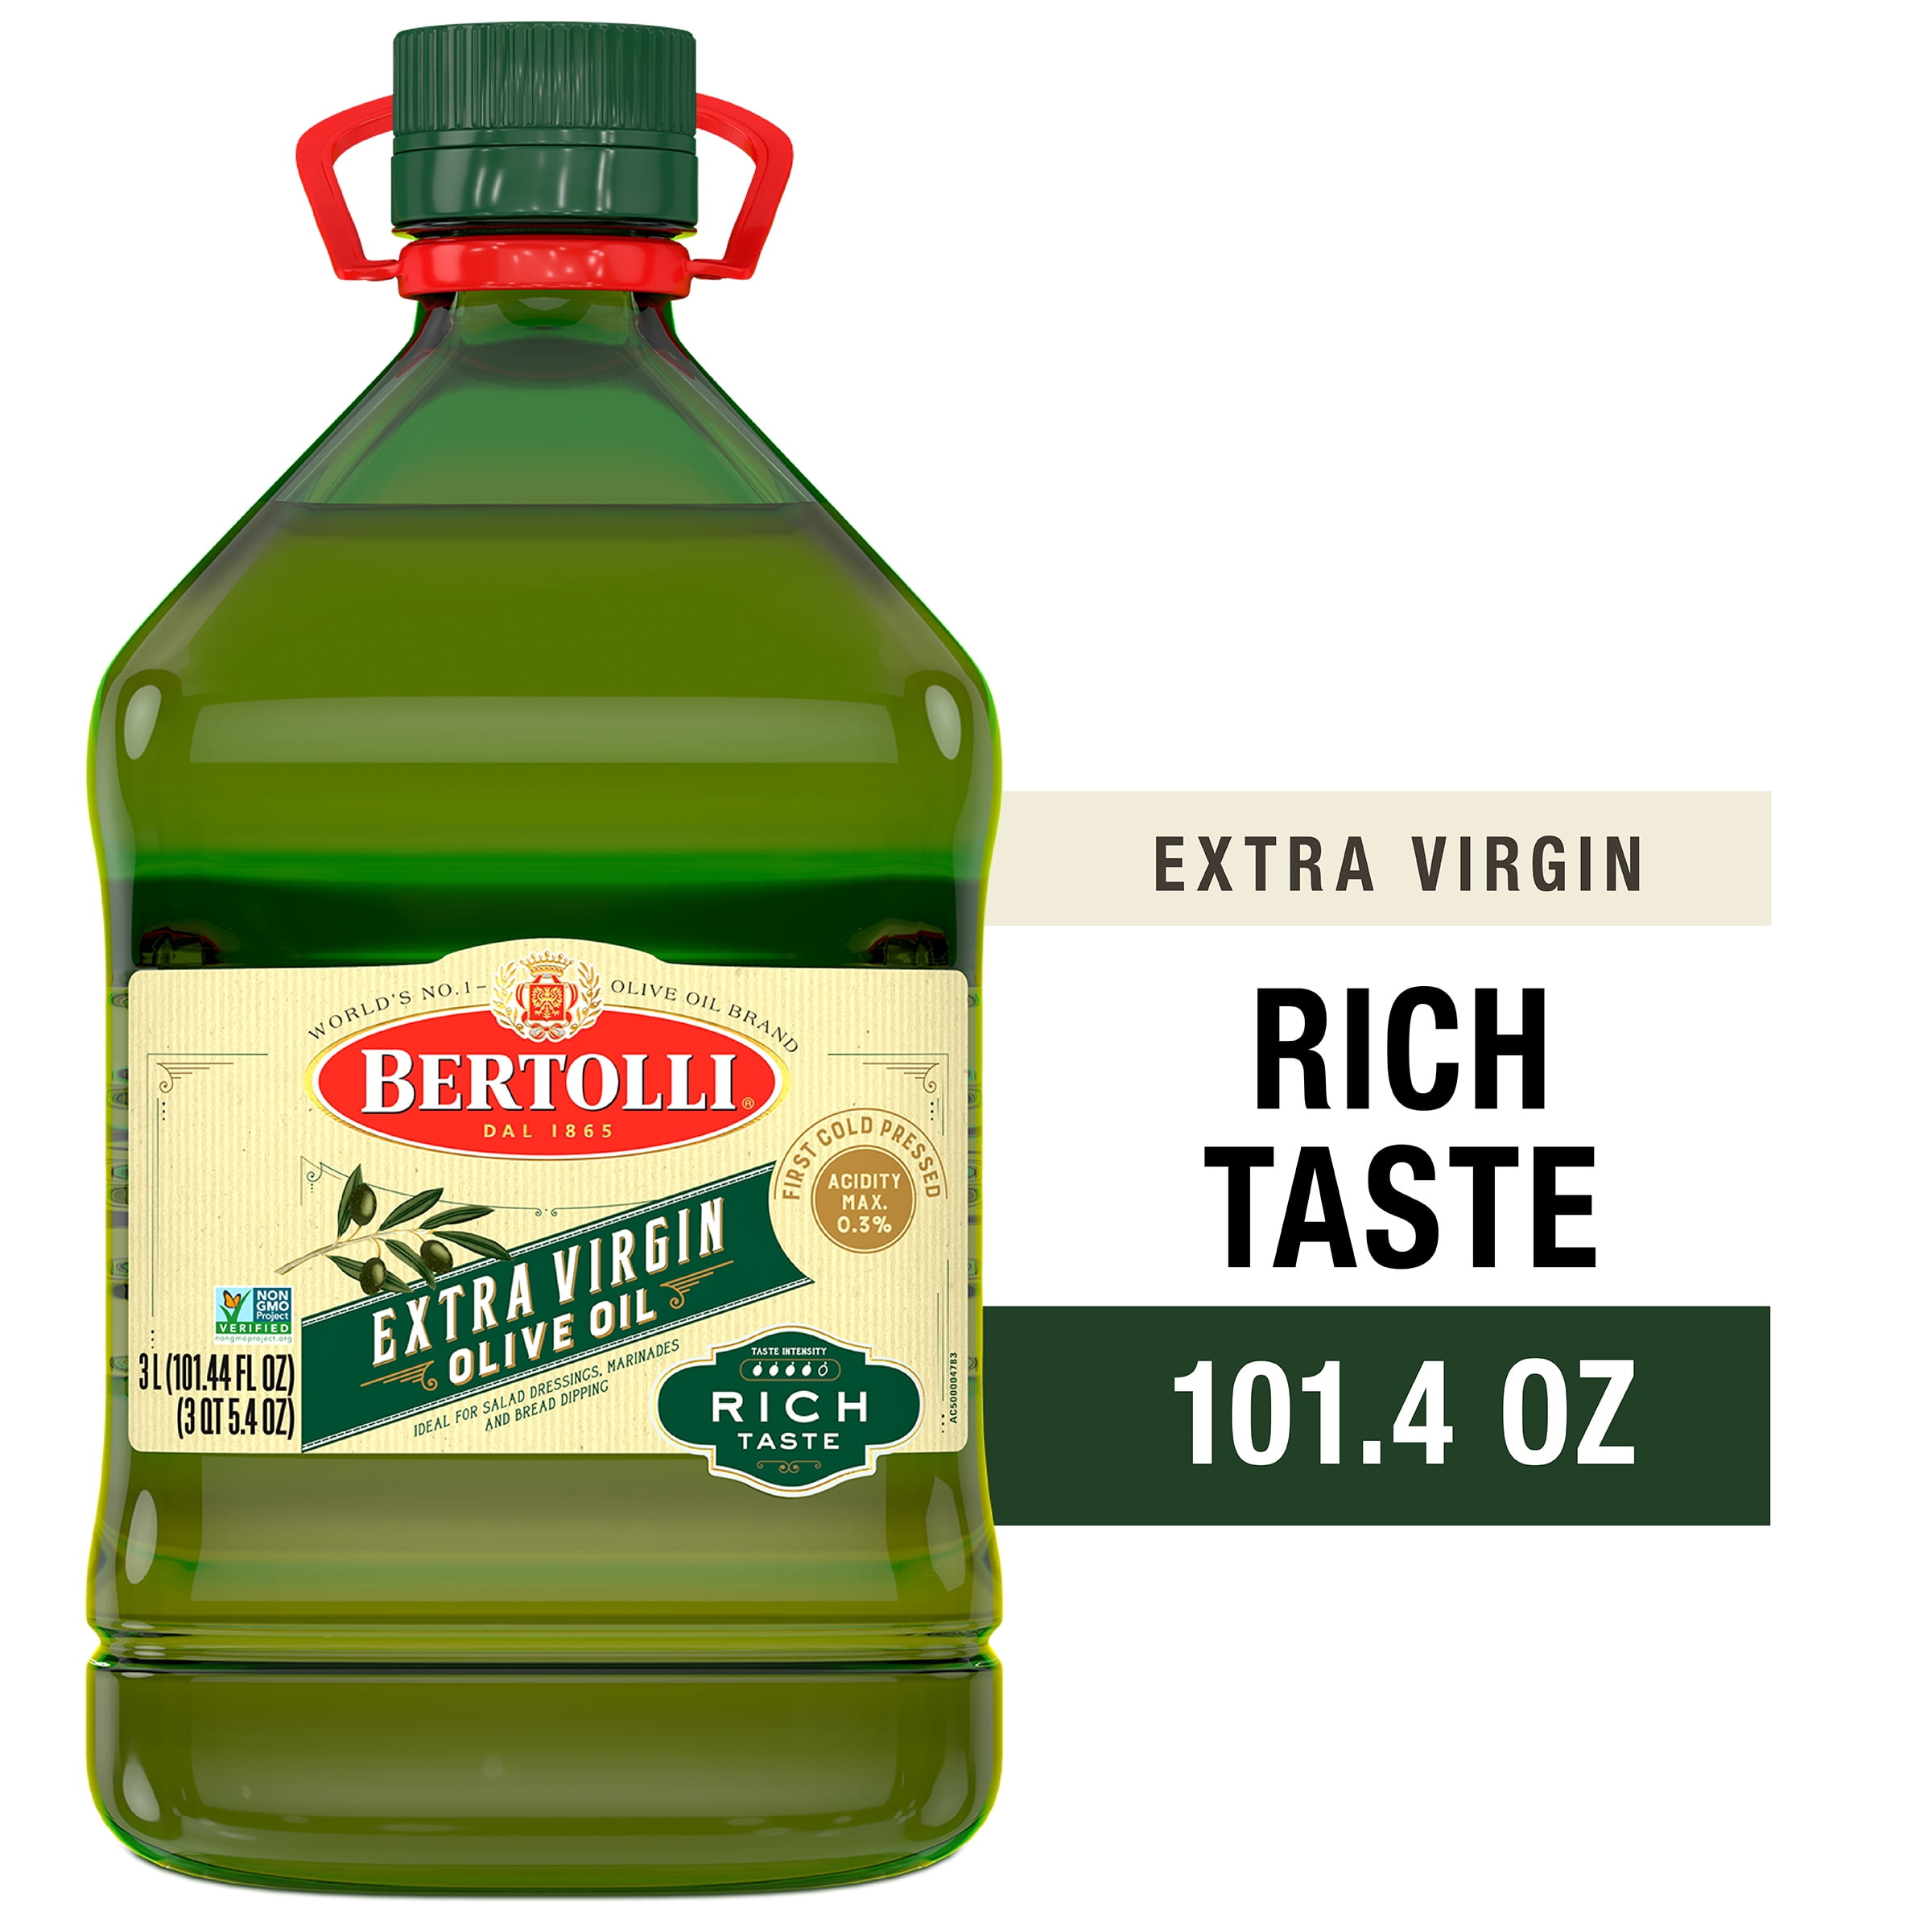 The Bulk 3-Liter Extra-Virgin Olive Oil Is The Ultimate Pantry Staple